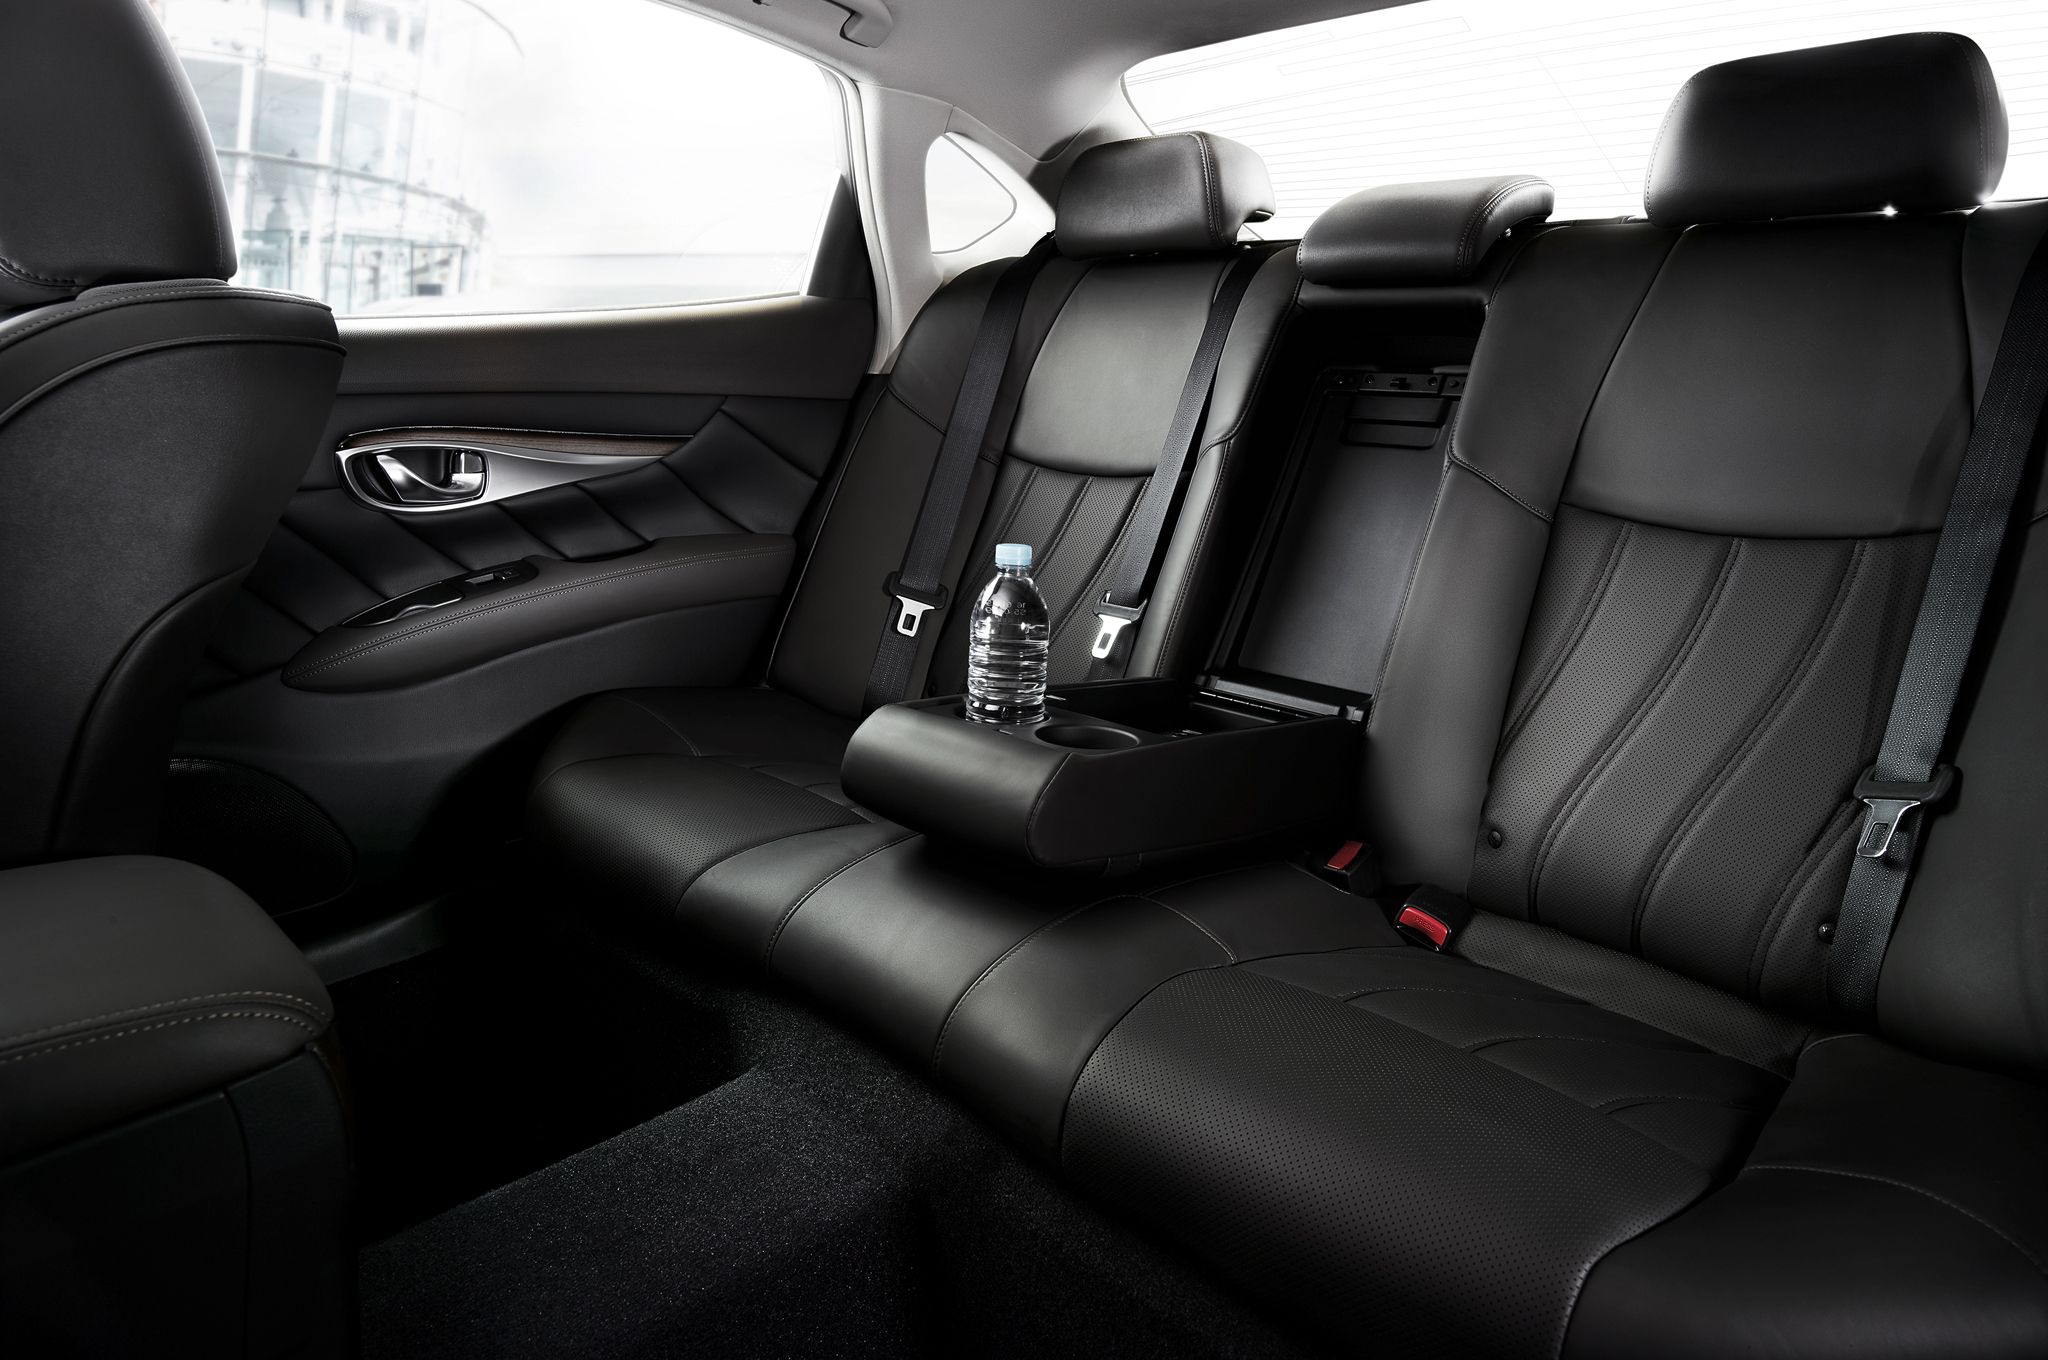 2015 Infiniti Q70l Rear Seat View (View 1 of 10)